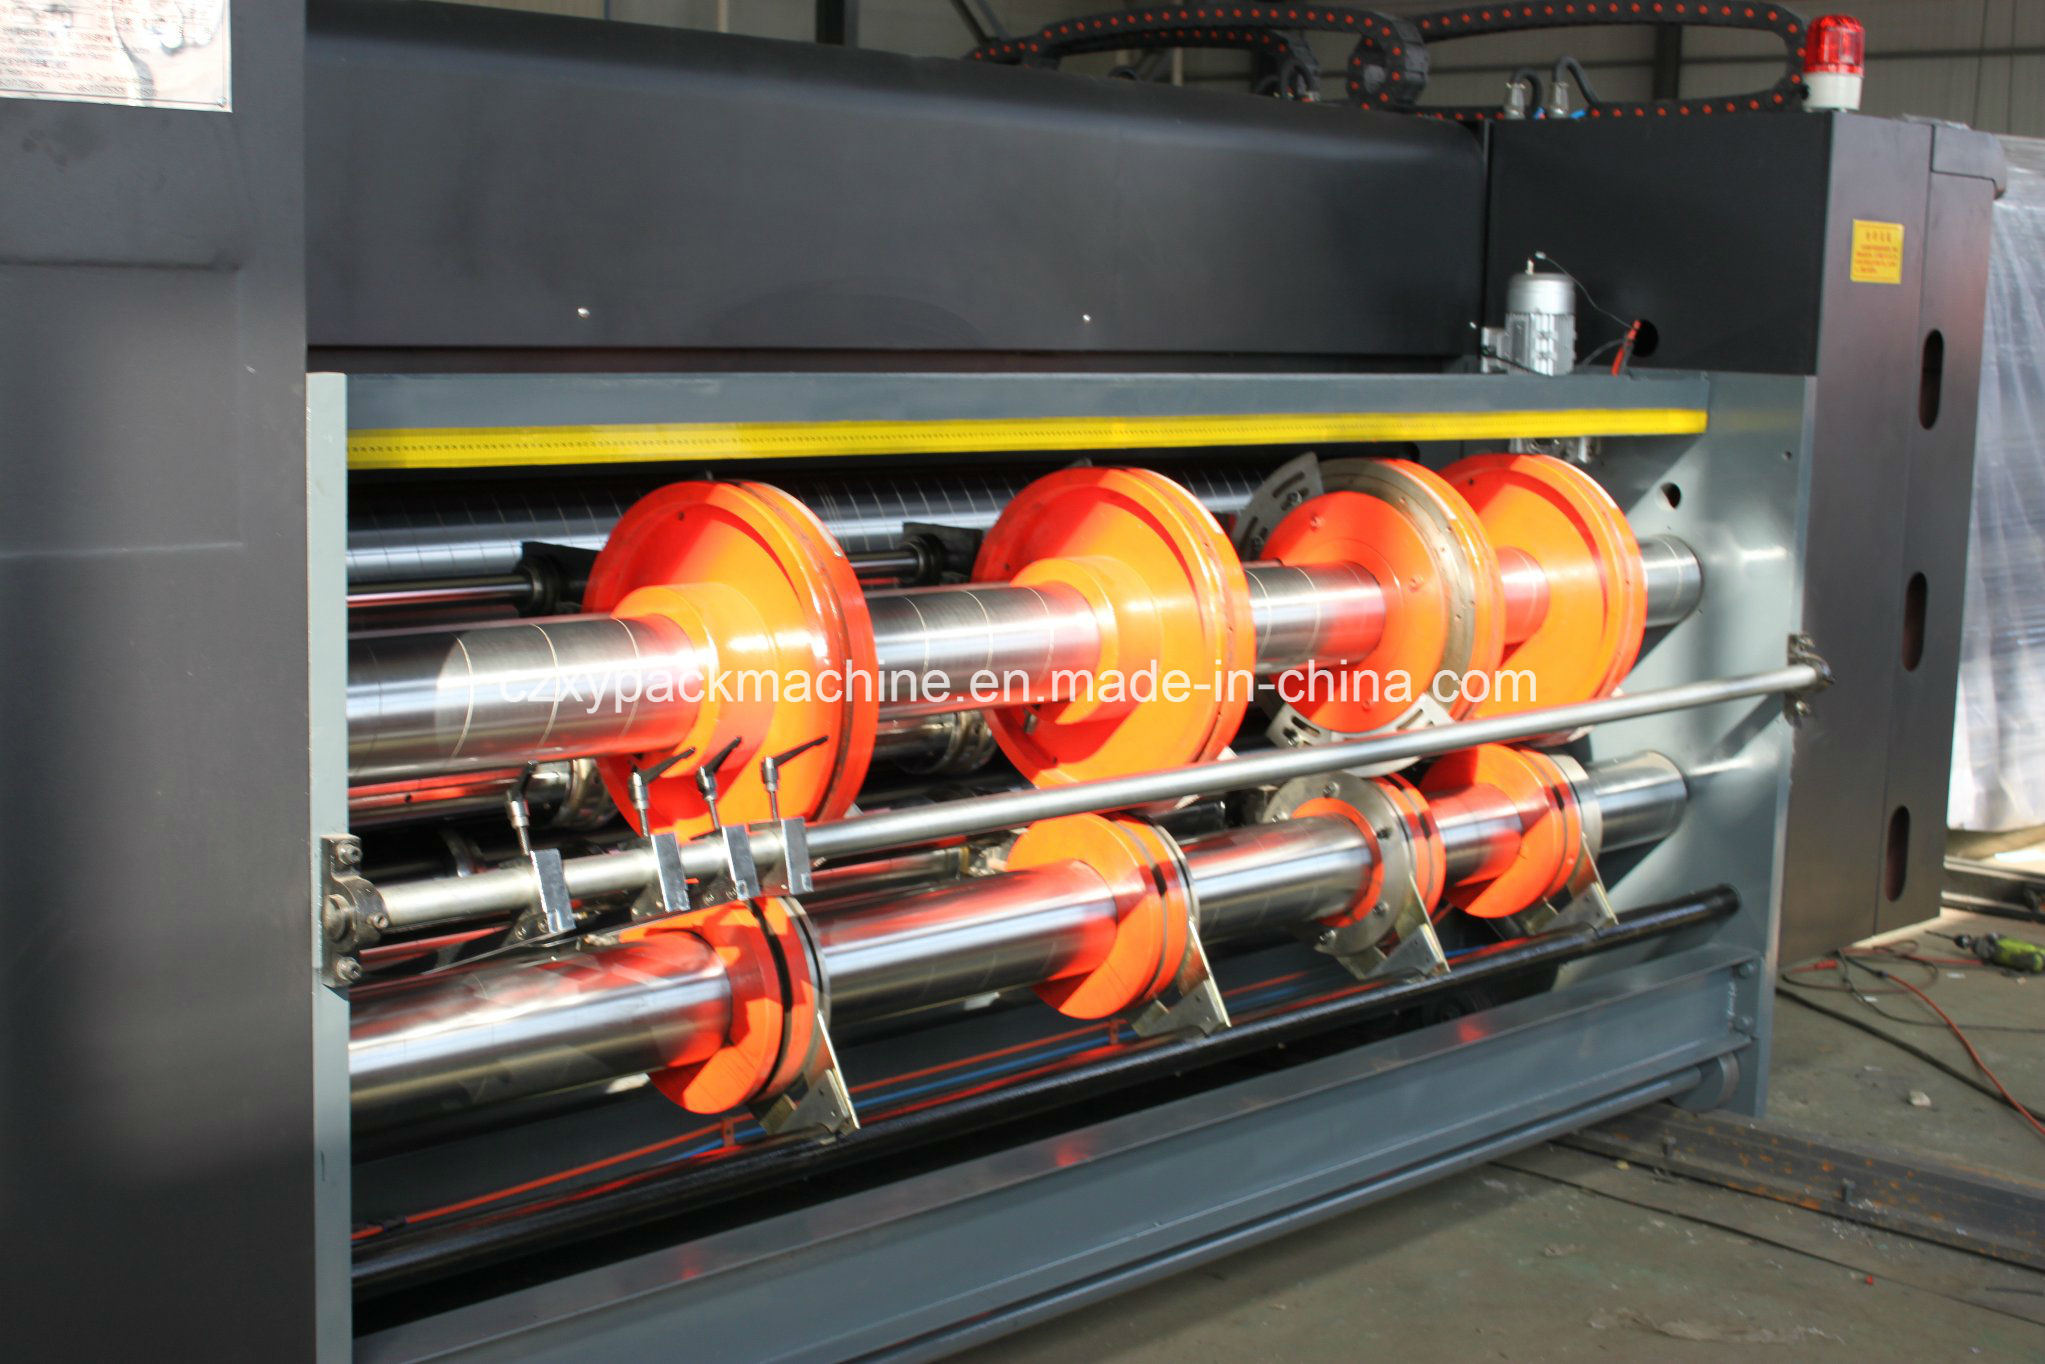 Semi-Automatic Printing Machine Chain Feeding for Corrugated Cardboard